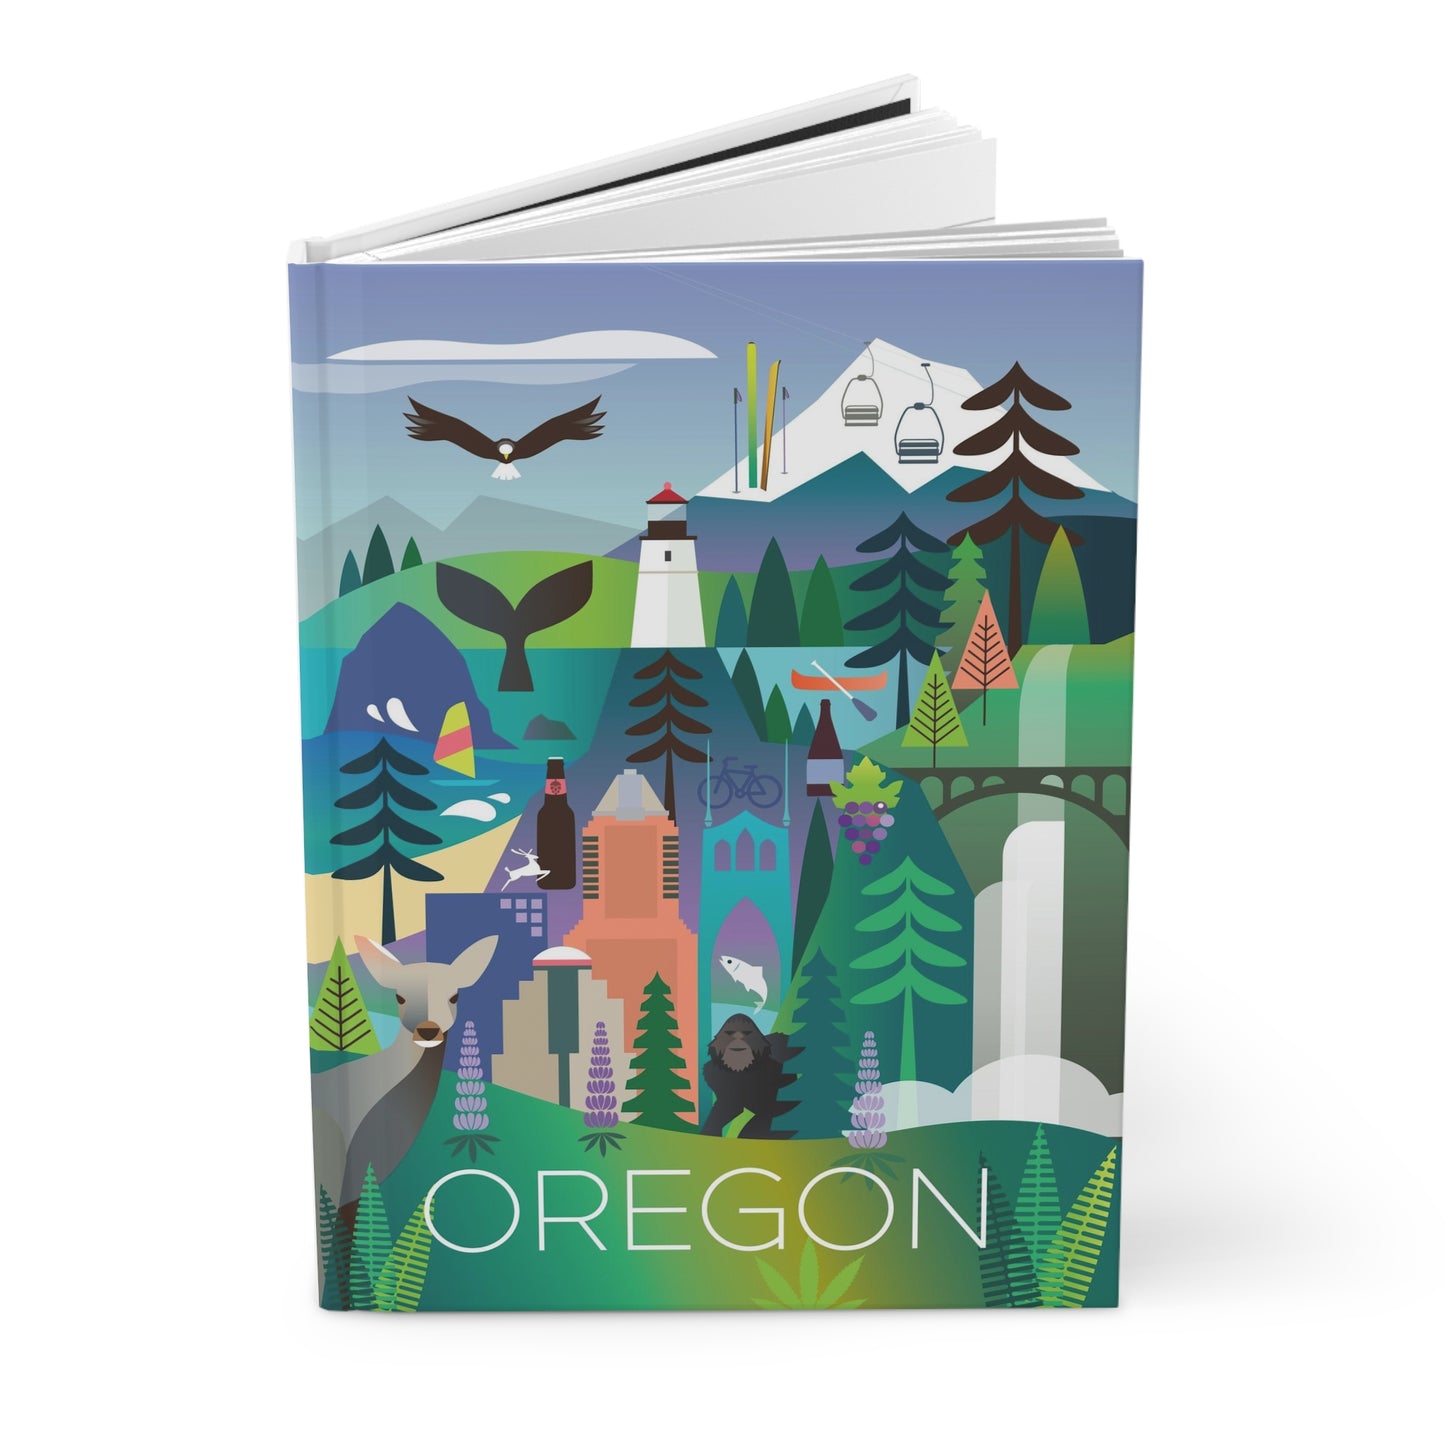 Oregon Hardcover Journal